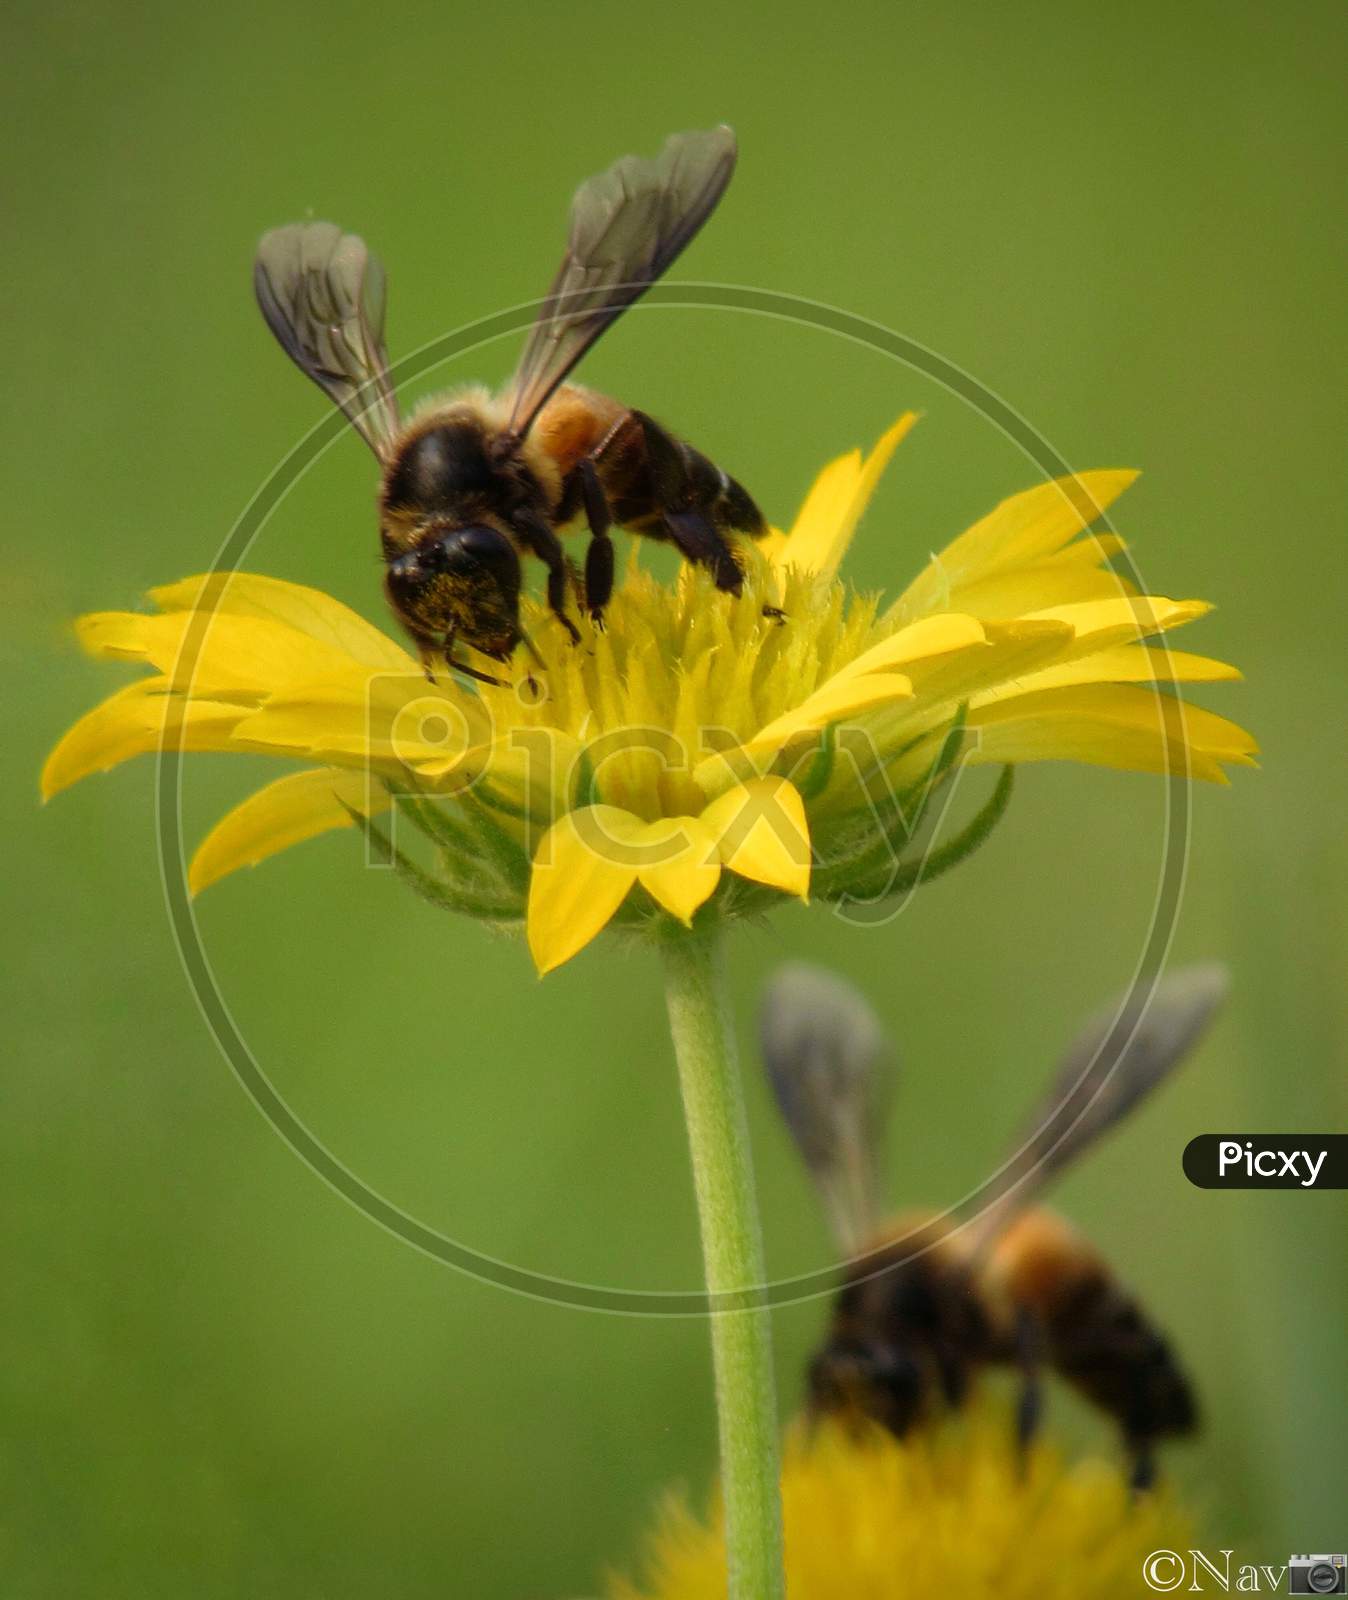 The honey bees